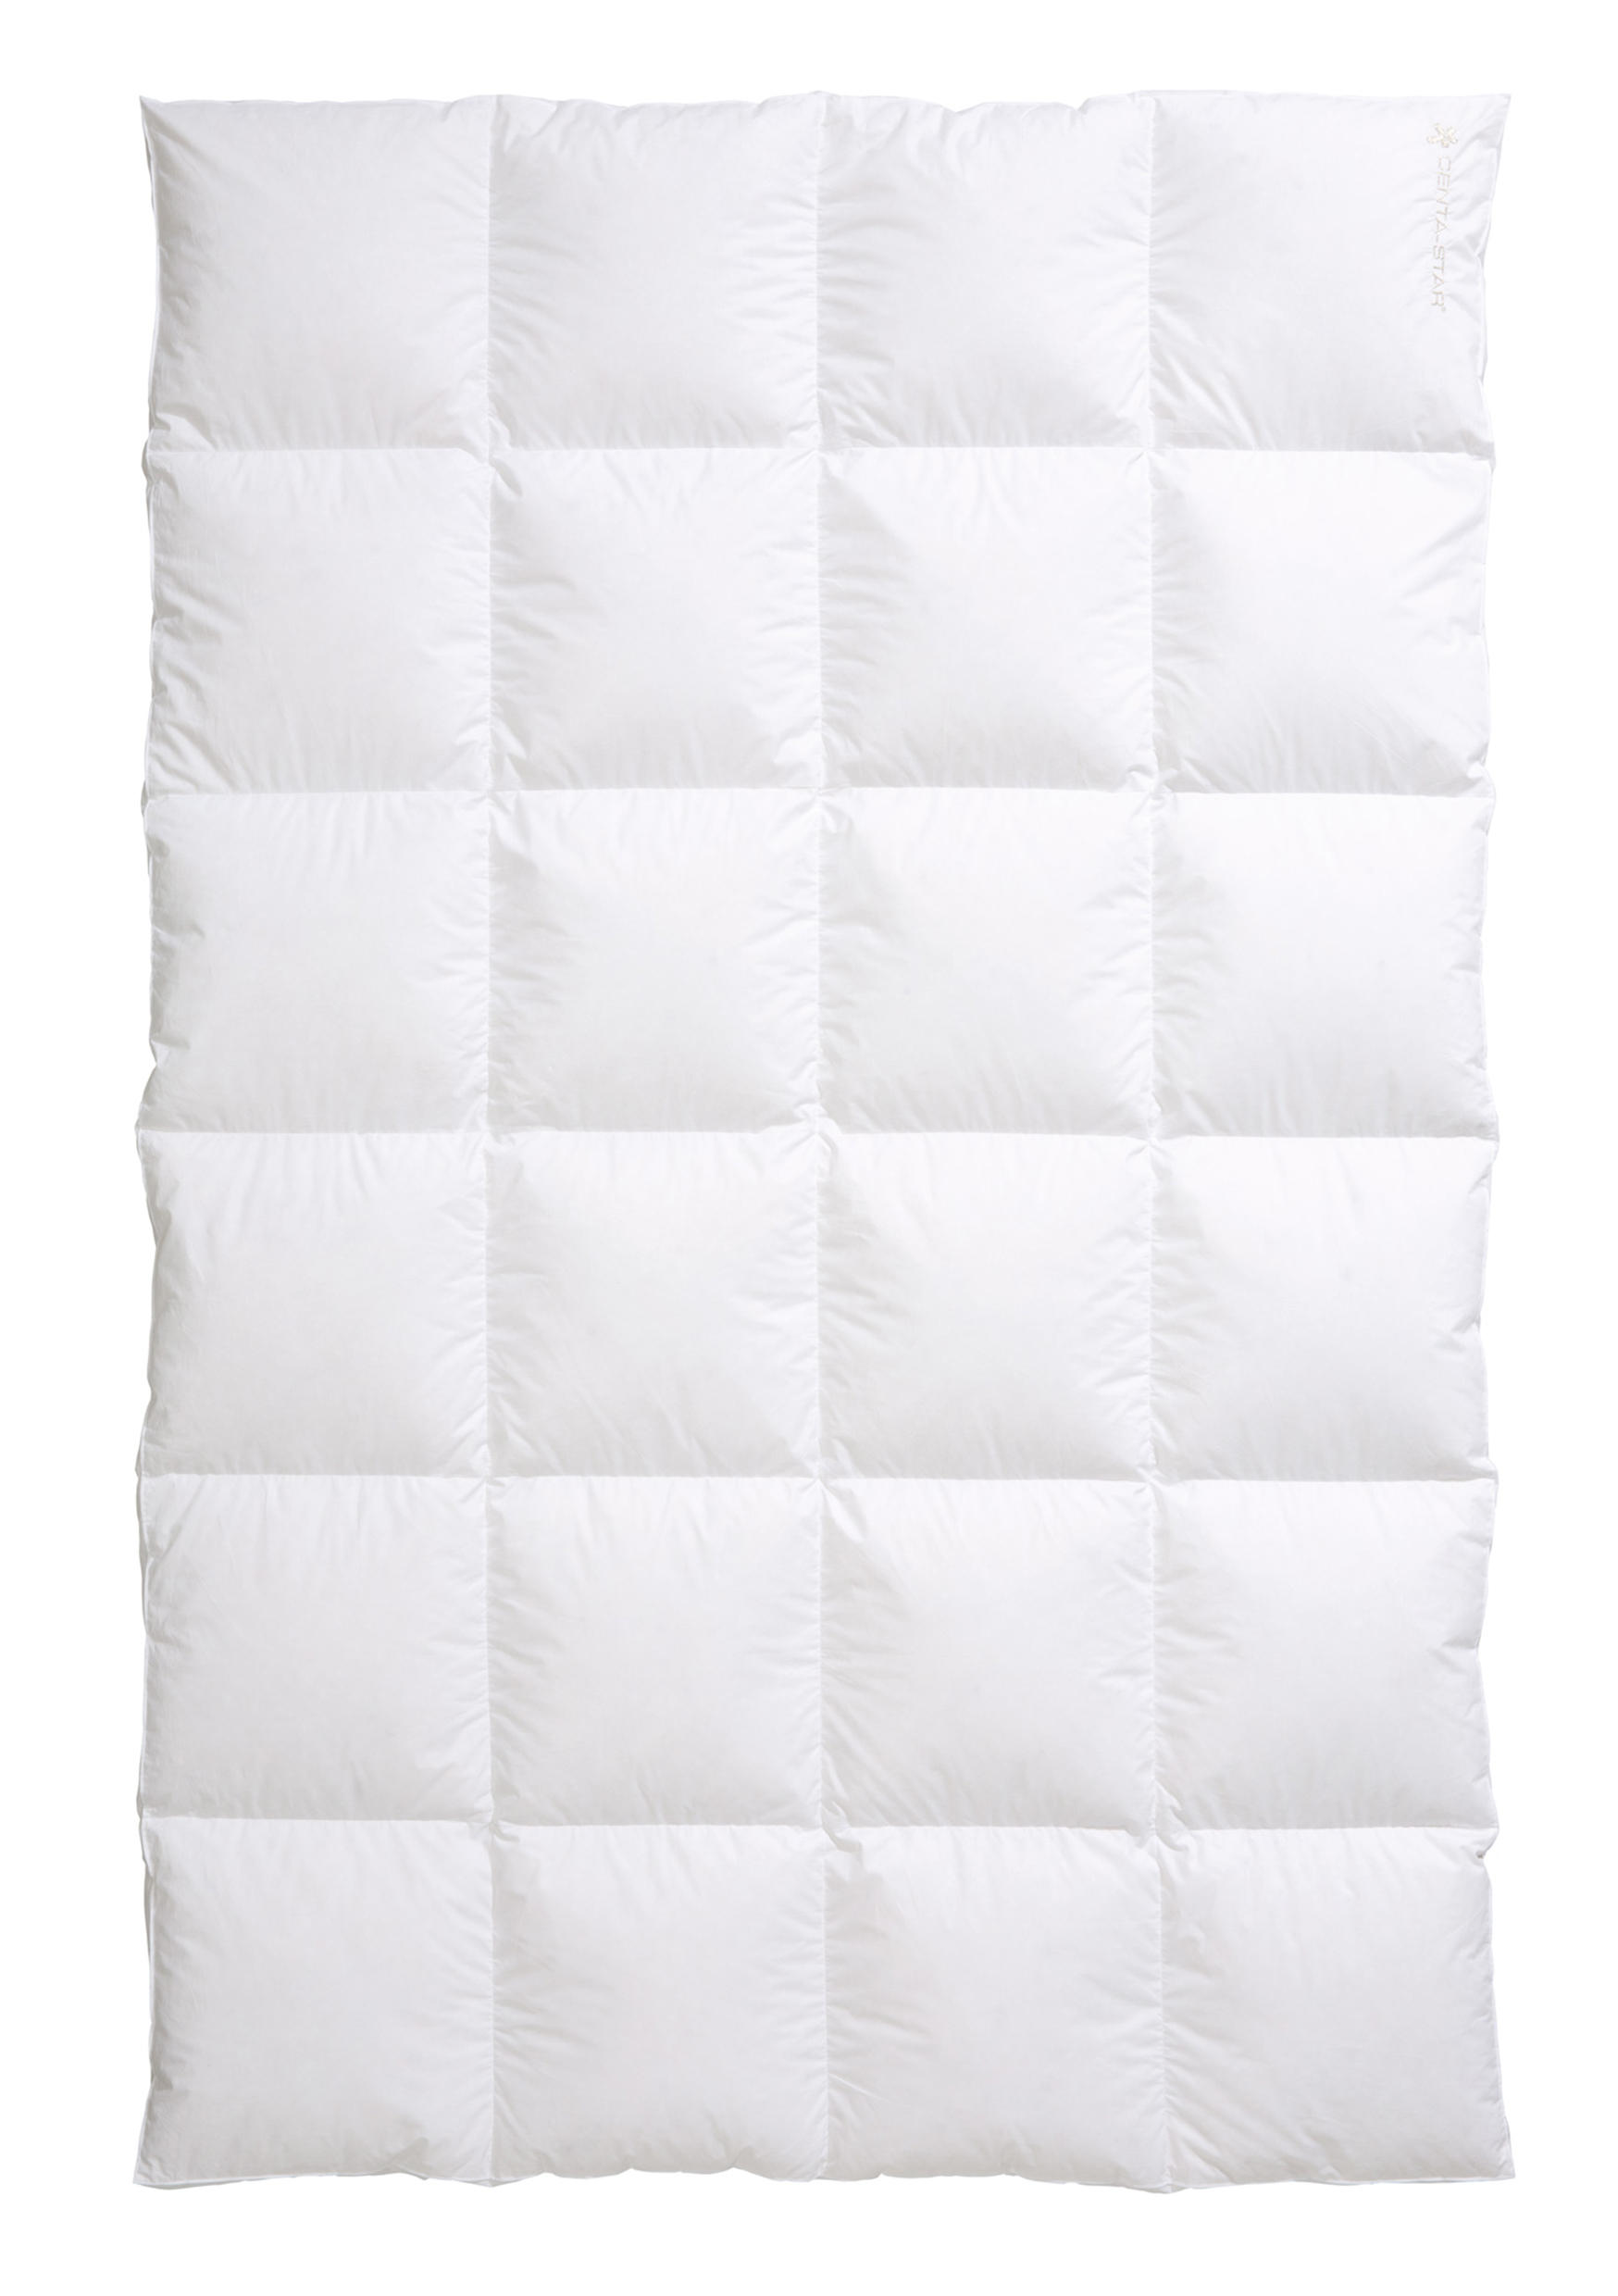 WINTERBETT  Harmony  200/200 cm   - Weiß, Basics, Textil (200/200cm) - Centa-Star